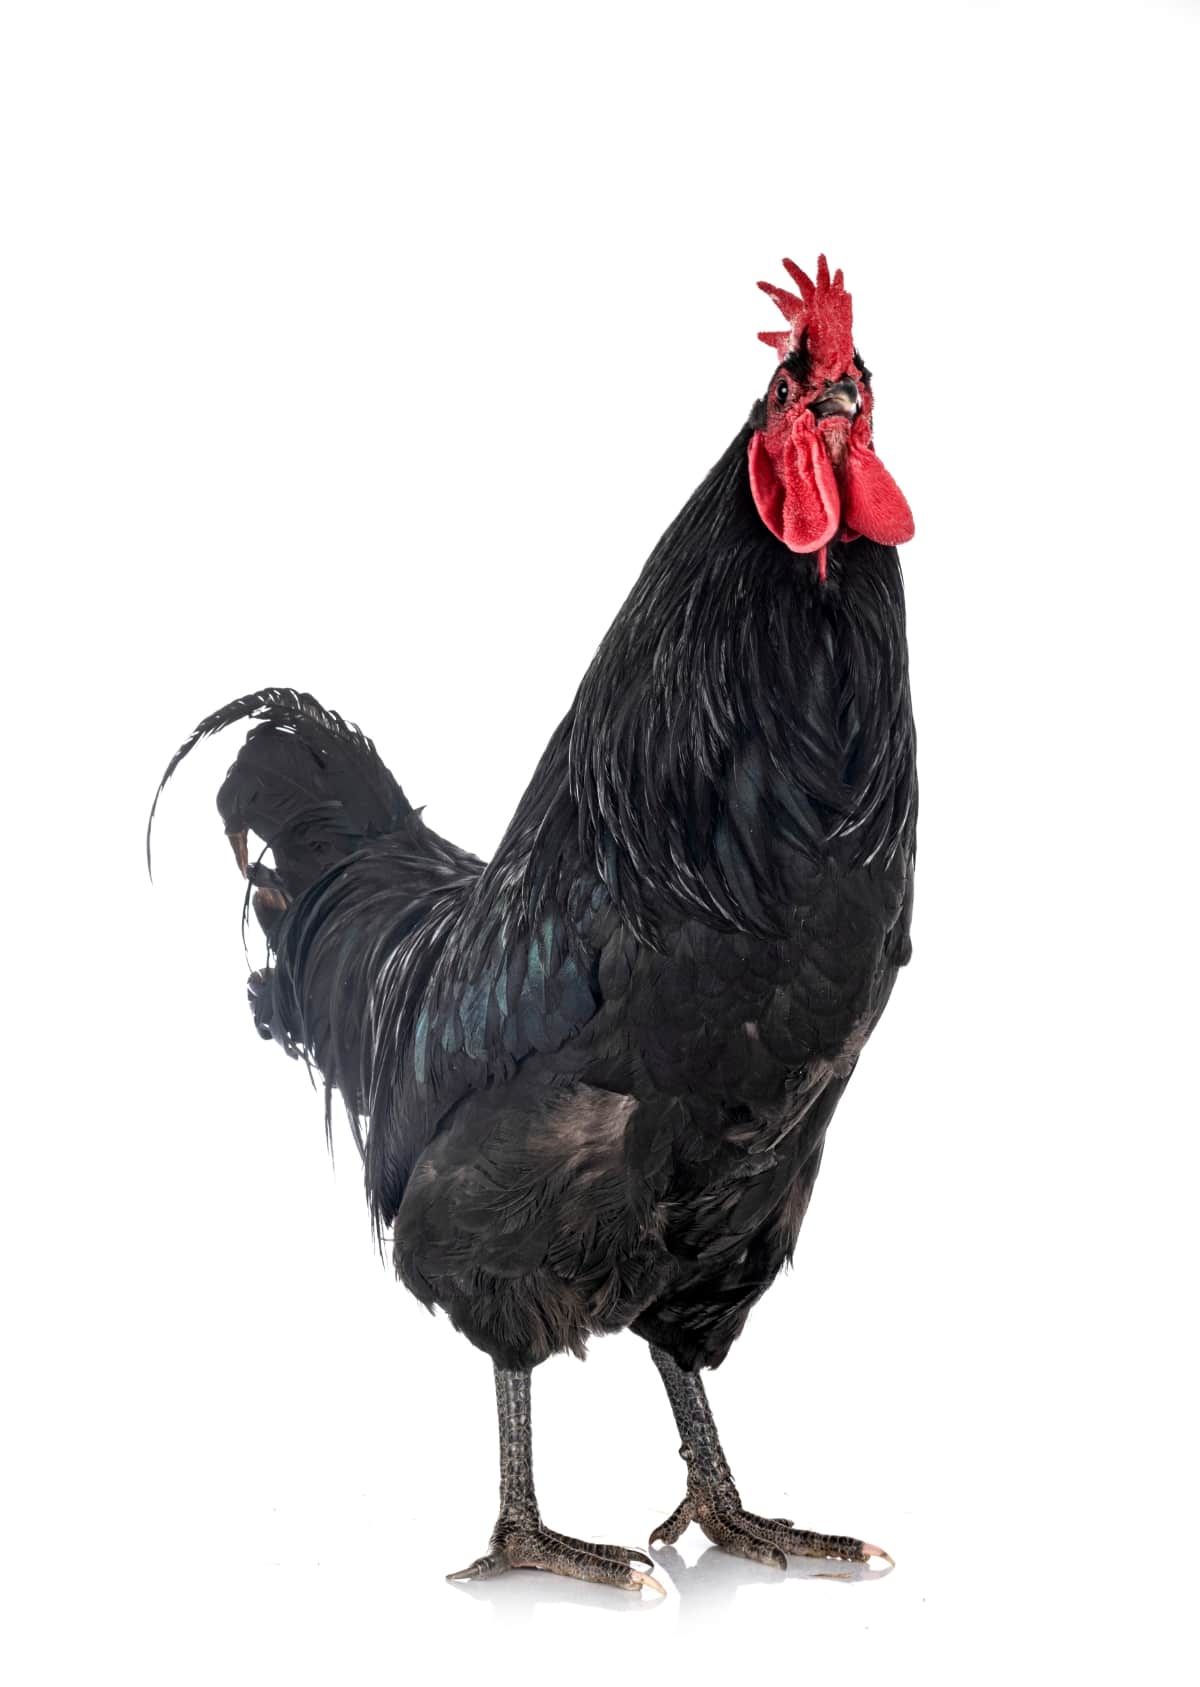 Indonesia's Prestigious Heritage Chicken Breed
